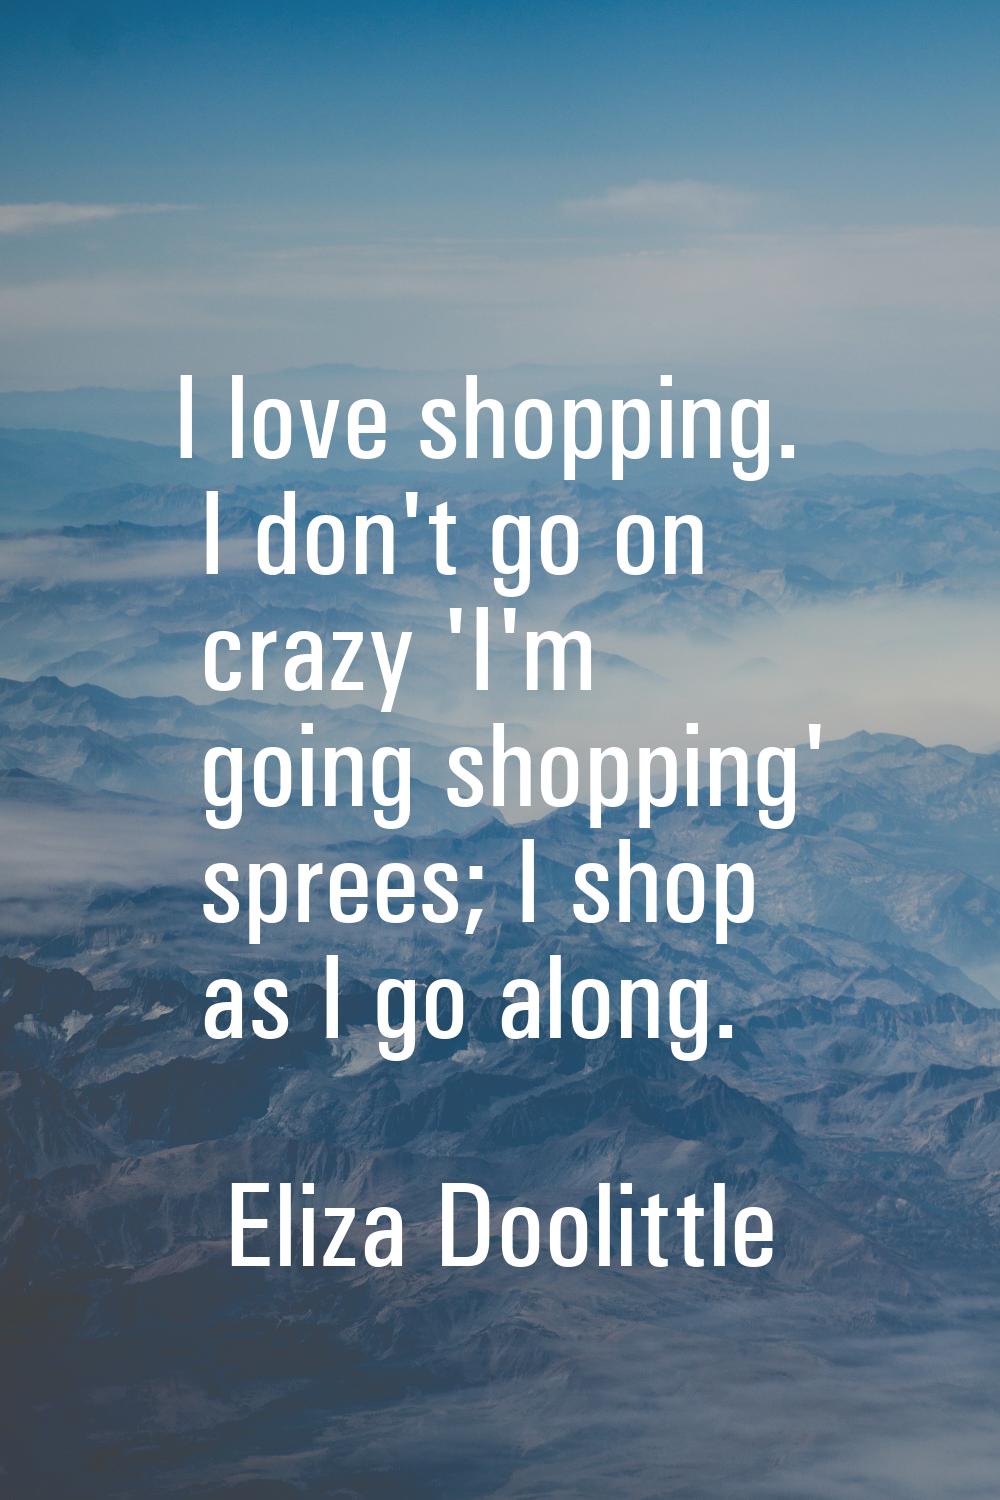 I love shopping. I don't go on crazy 'I'm going shopping' sprees; I shop as I go along.